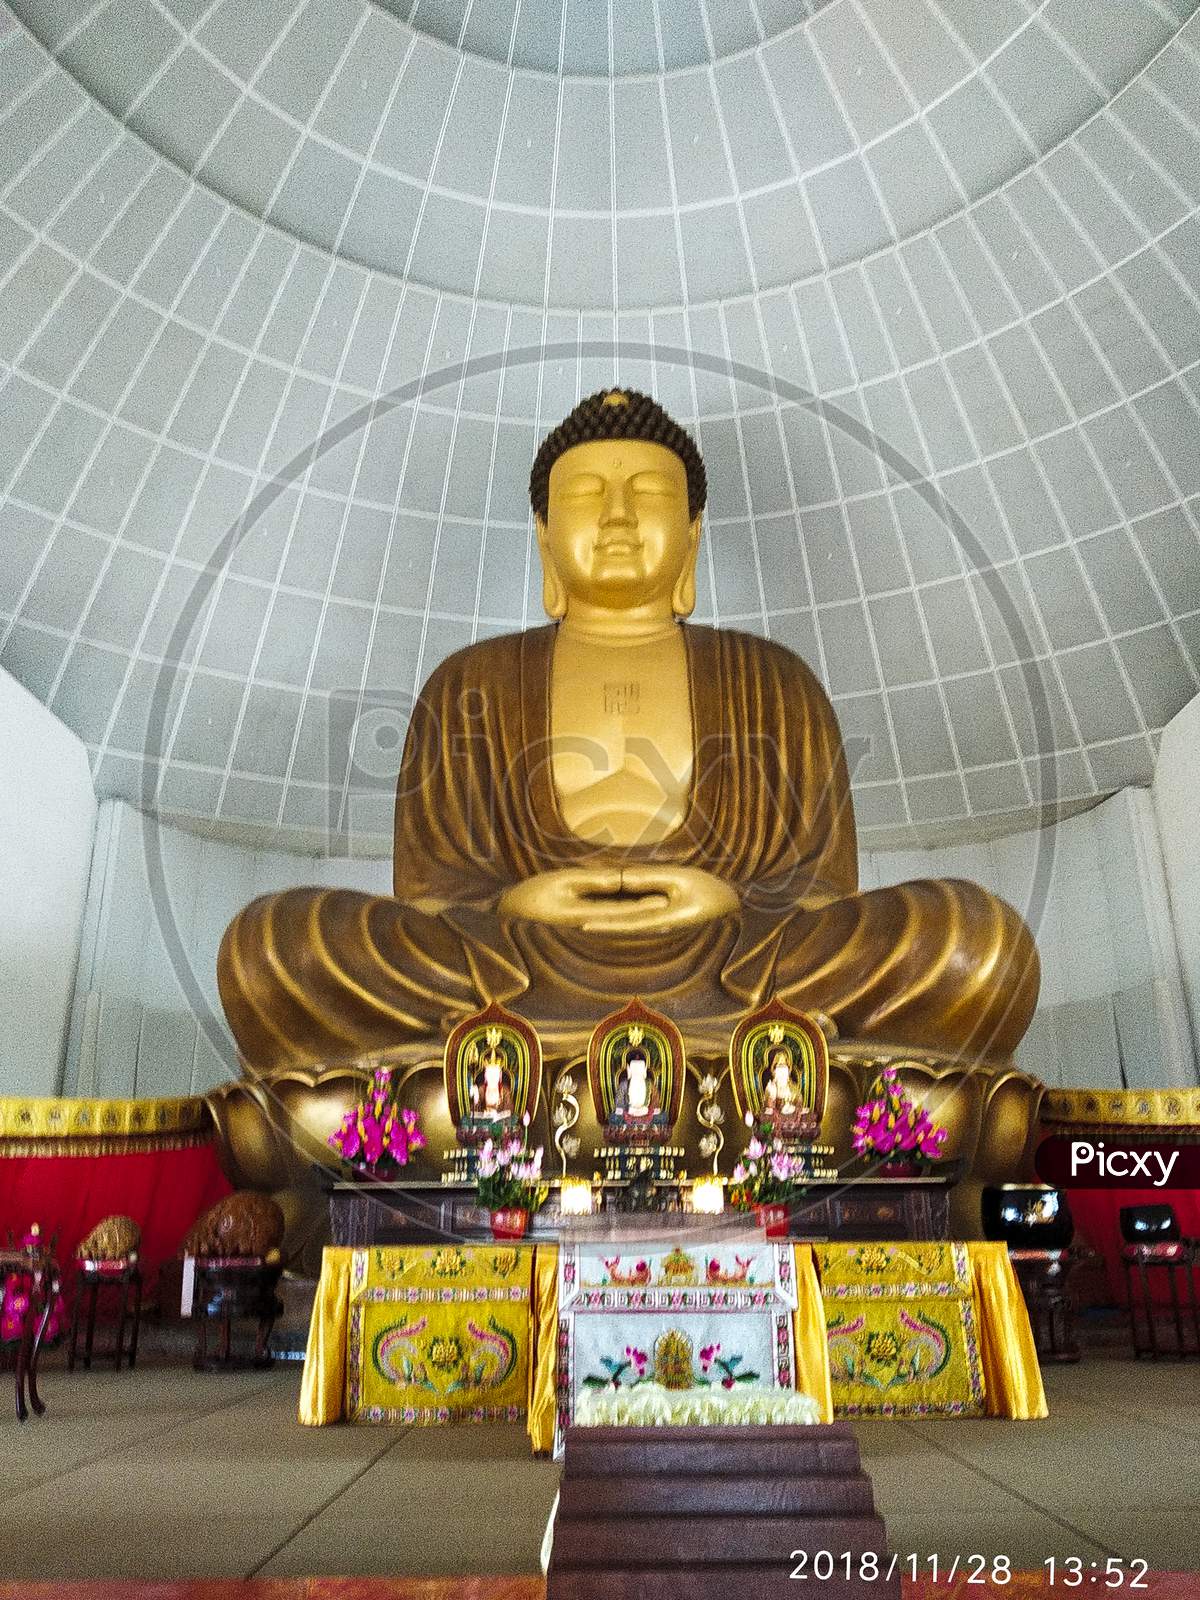 Big Beautiful Buddha statue at Buddhist monastery